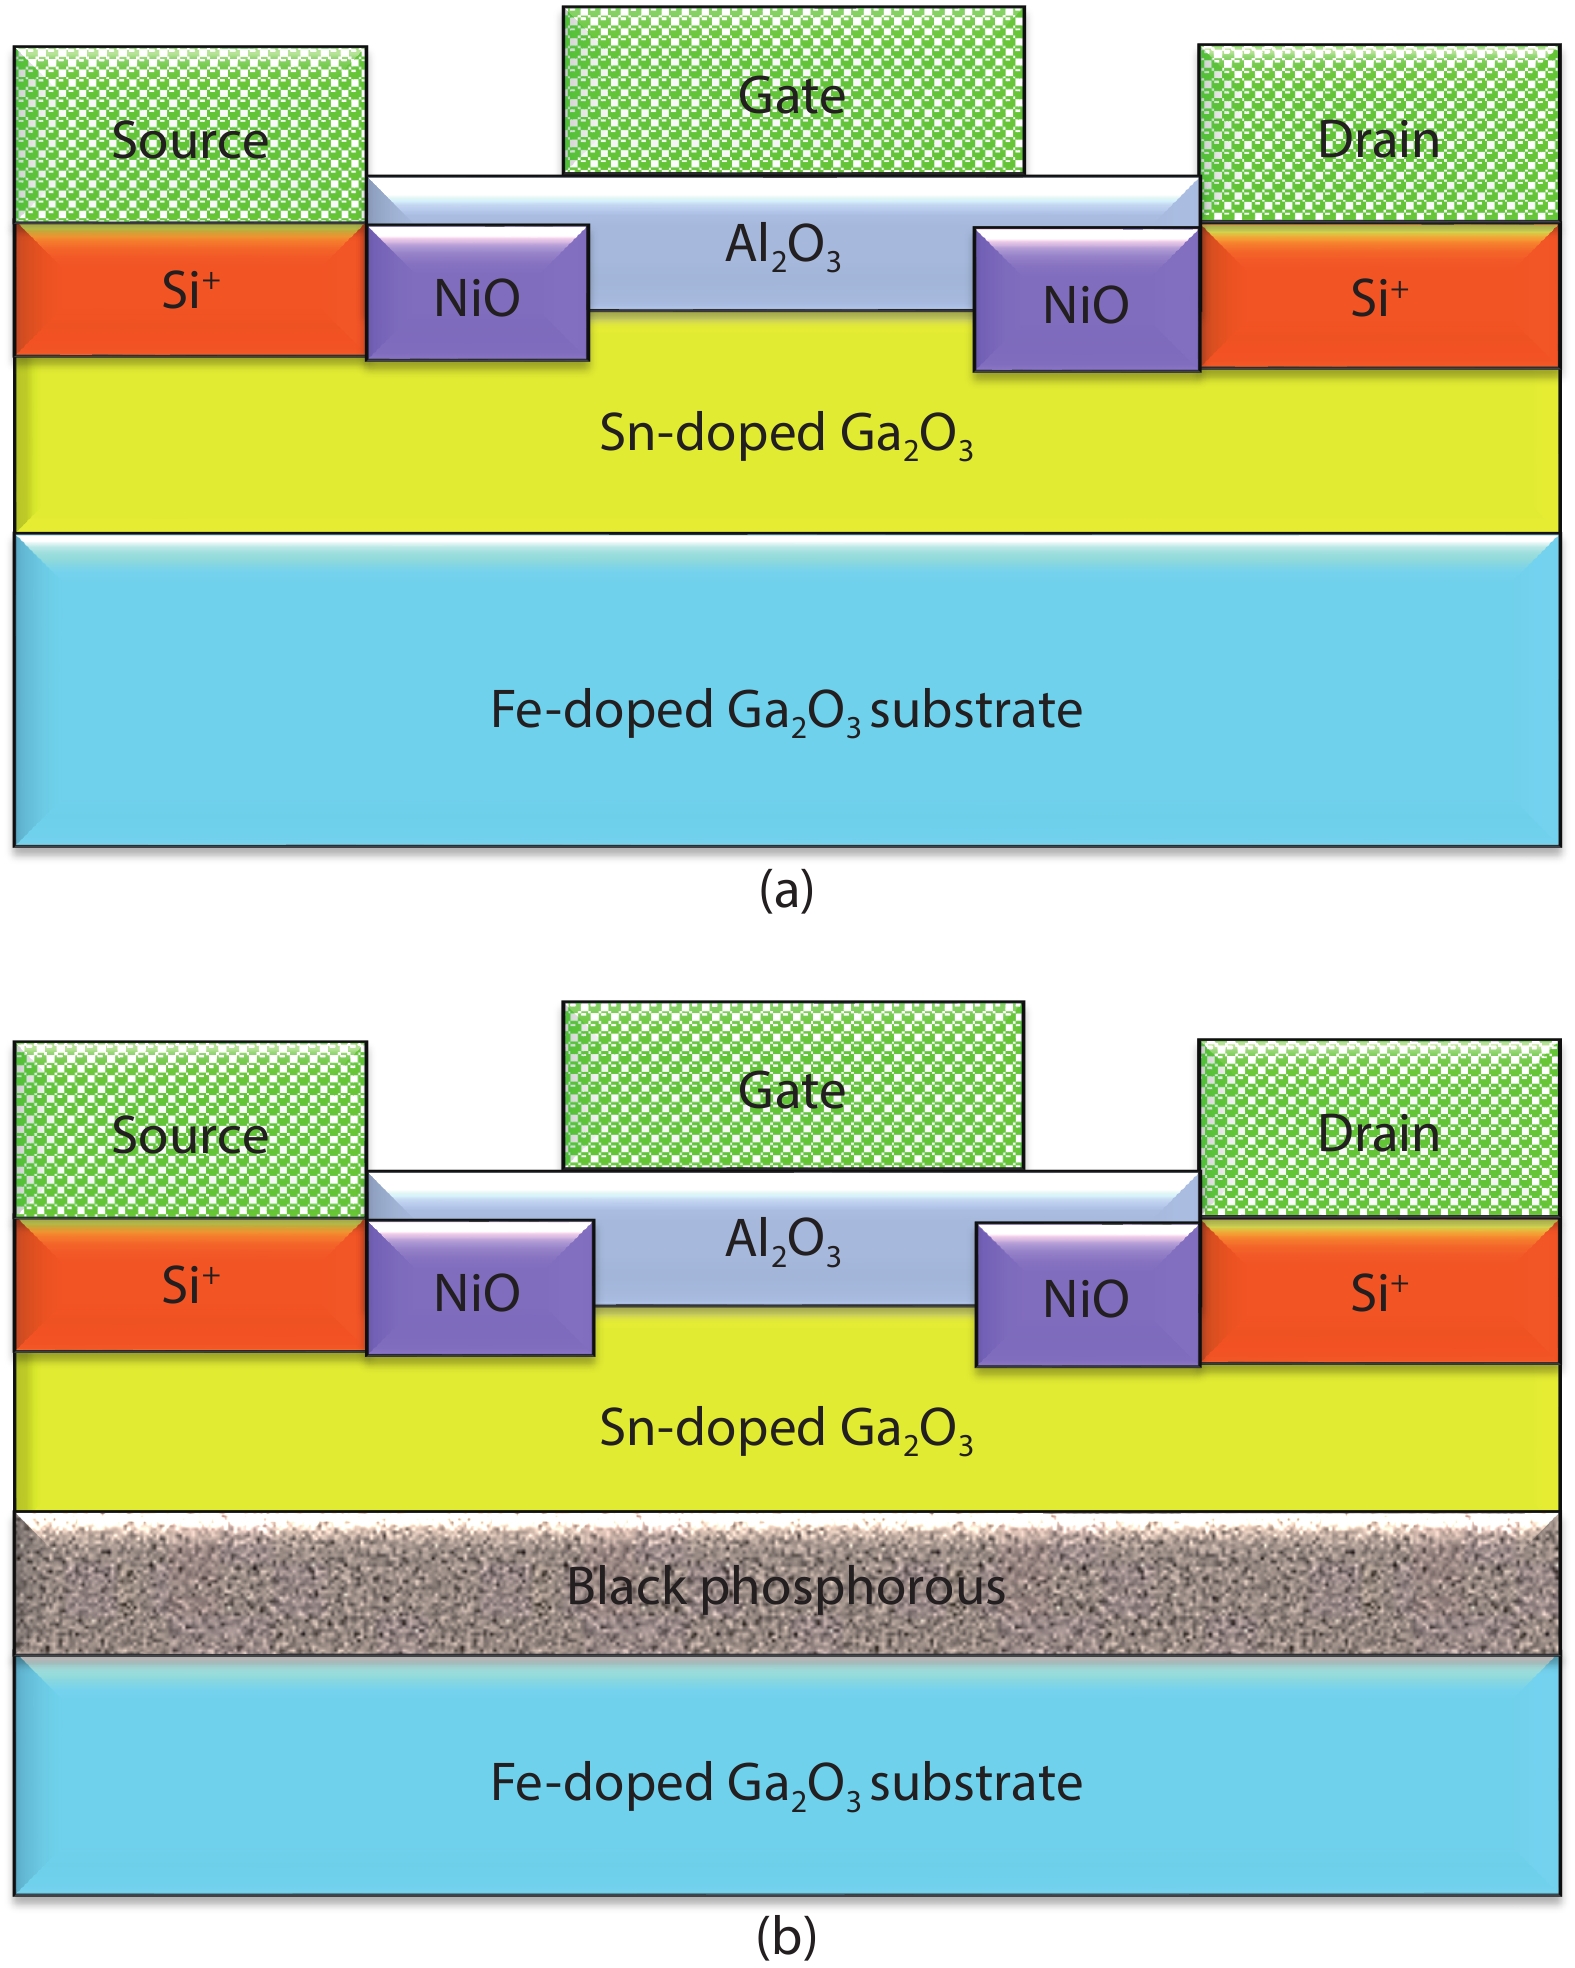 (Color online) (a) P-type NiO-pocket based β-Ga2O3 MOSFET. (b) P-type NiO-pocket based β-Ga2O3/black phosphorous heterostructure MOSFET.